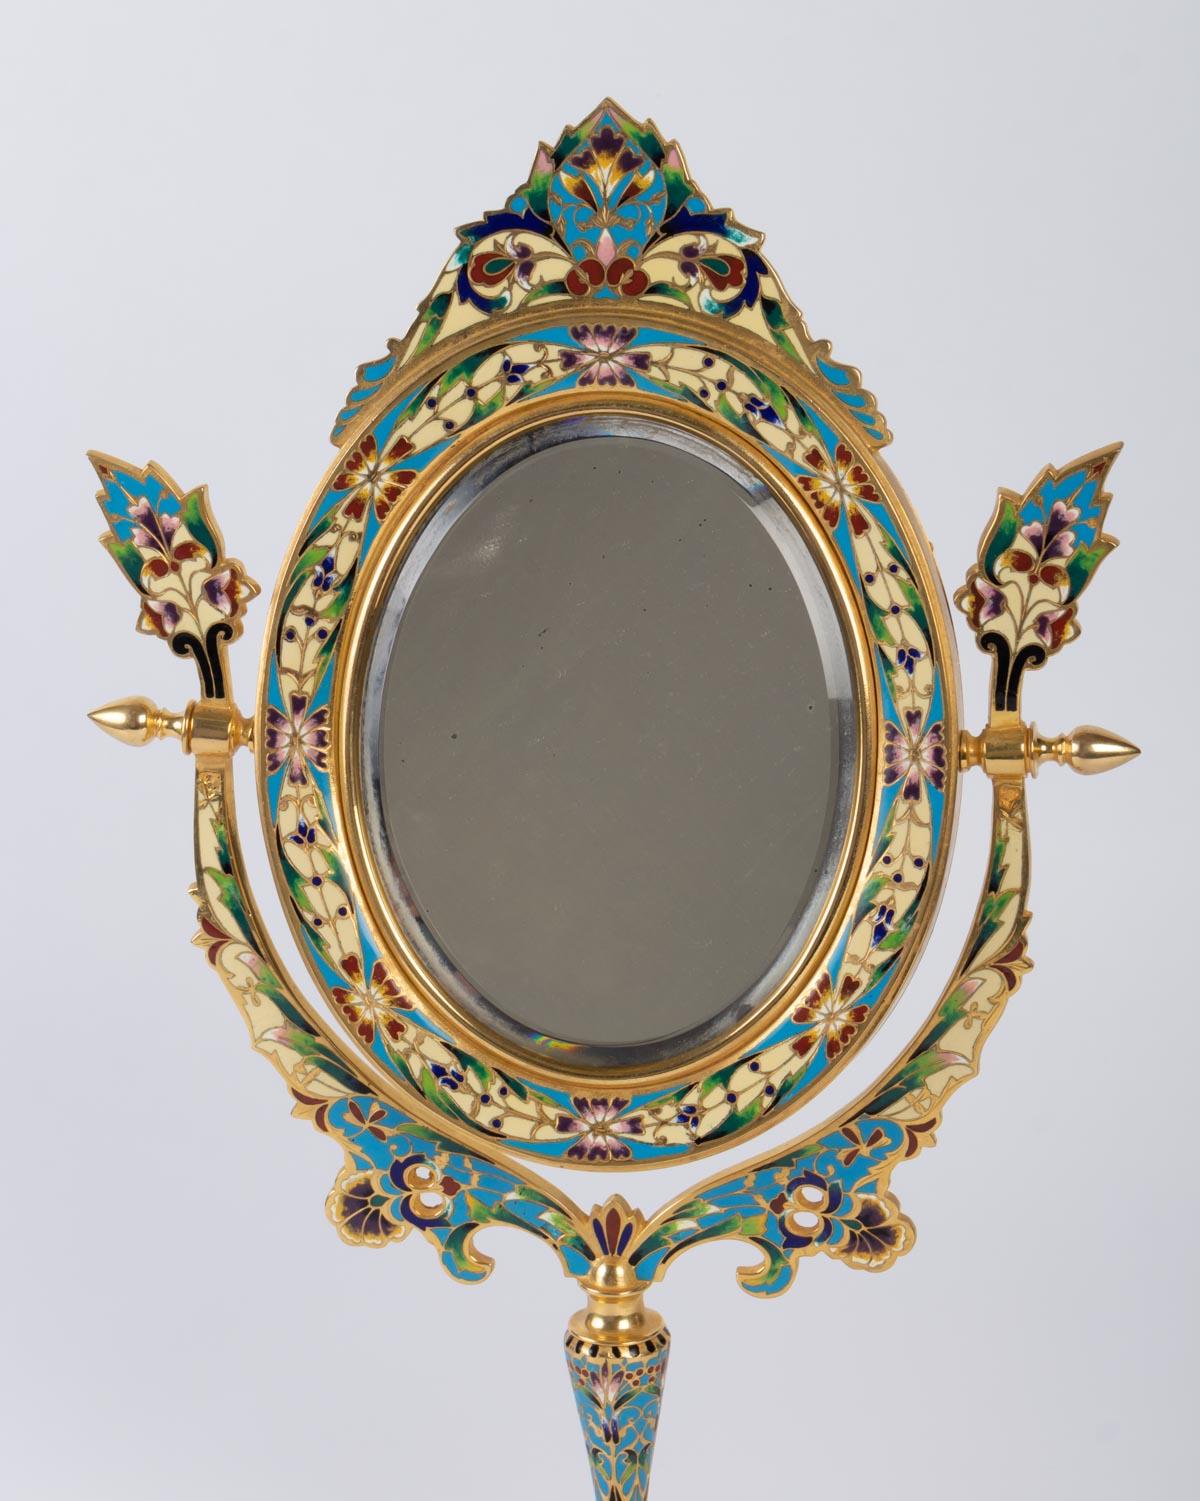 Golden bronze and cloisonné mirror, 19th century, Napoleon III period.

Measures: H 39 cm, W 24 cm, D 12 cm.